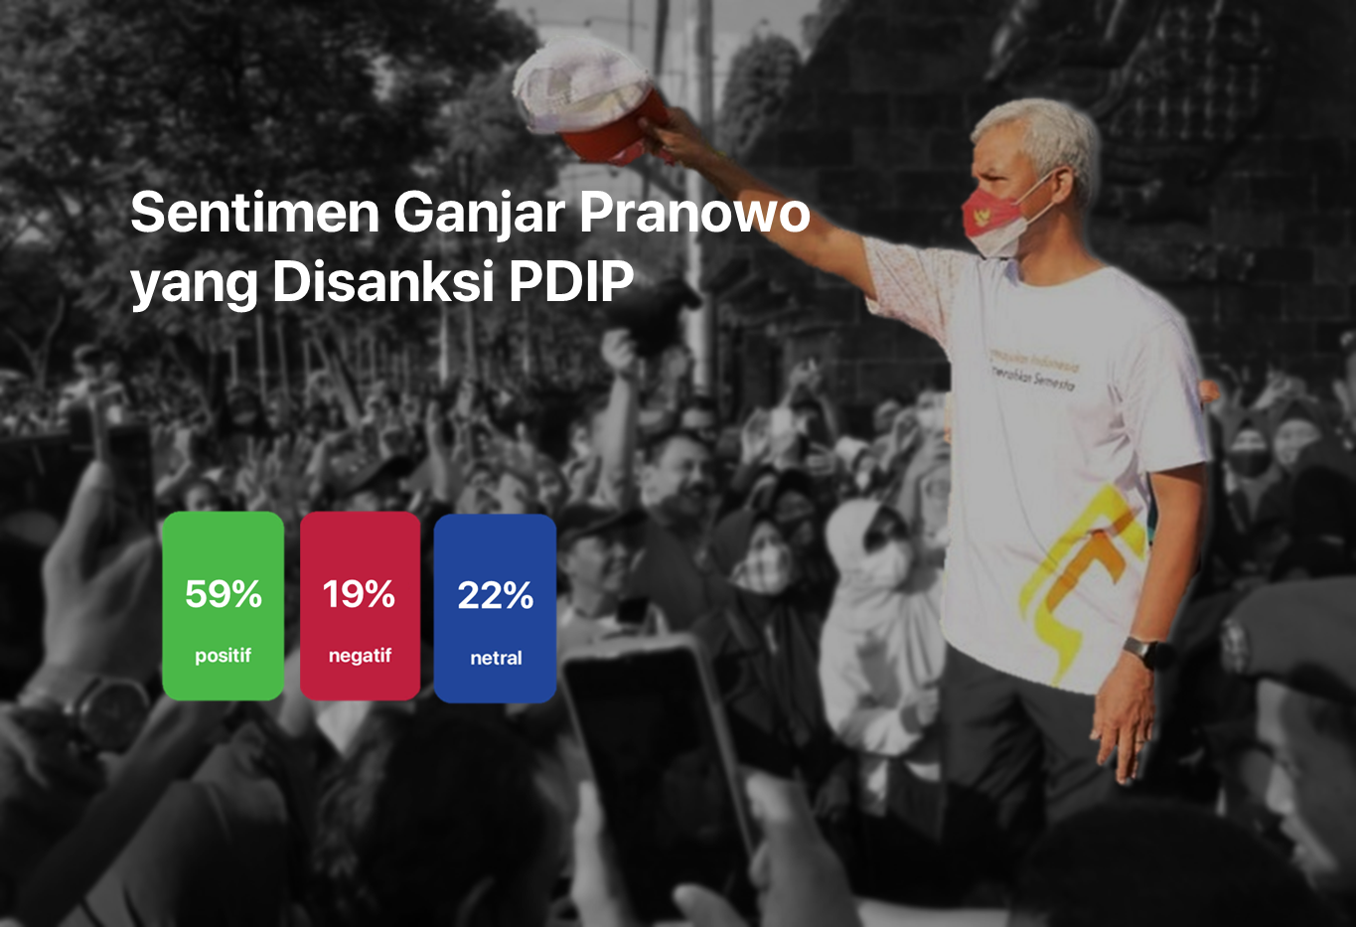 Ganjar Pranowo Disanksi PDIP, Relawan Heran, Pengamat Anggap Kurang Kerjaan